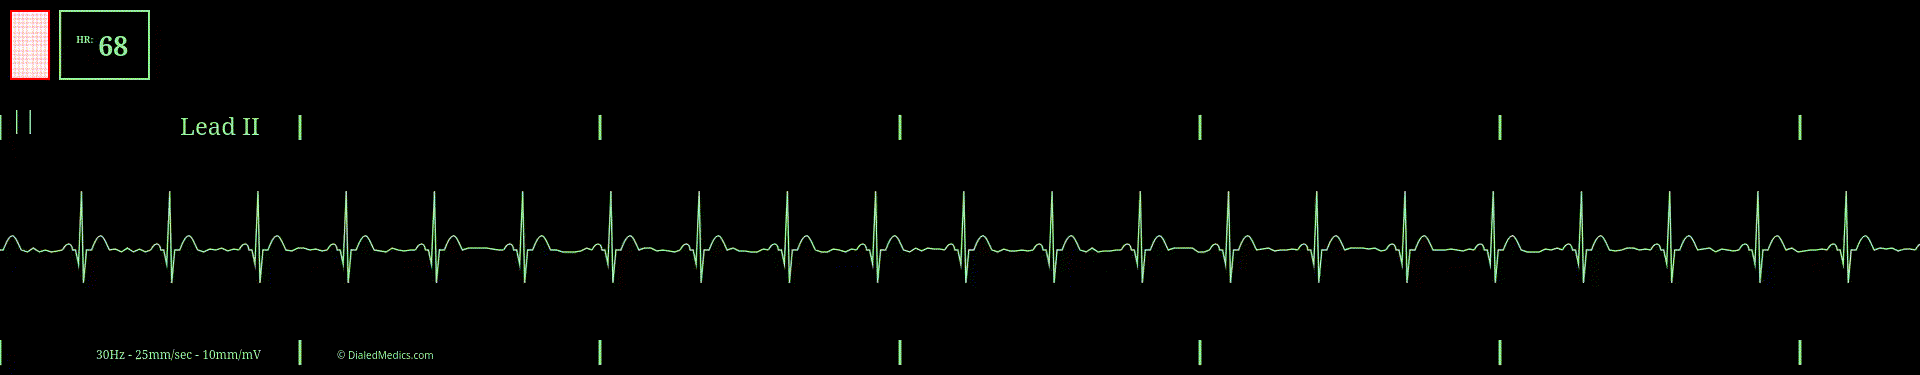 EKG monitor simulation of normal sinus rhythm at a rate of 68bpm.